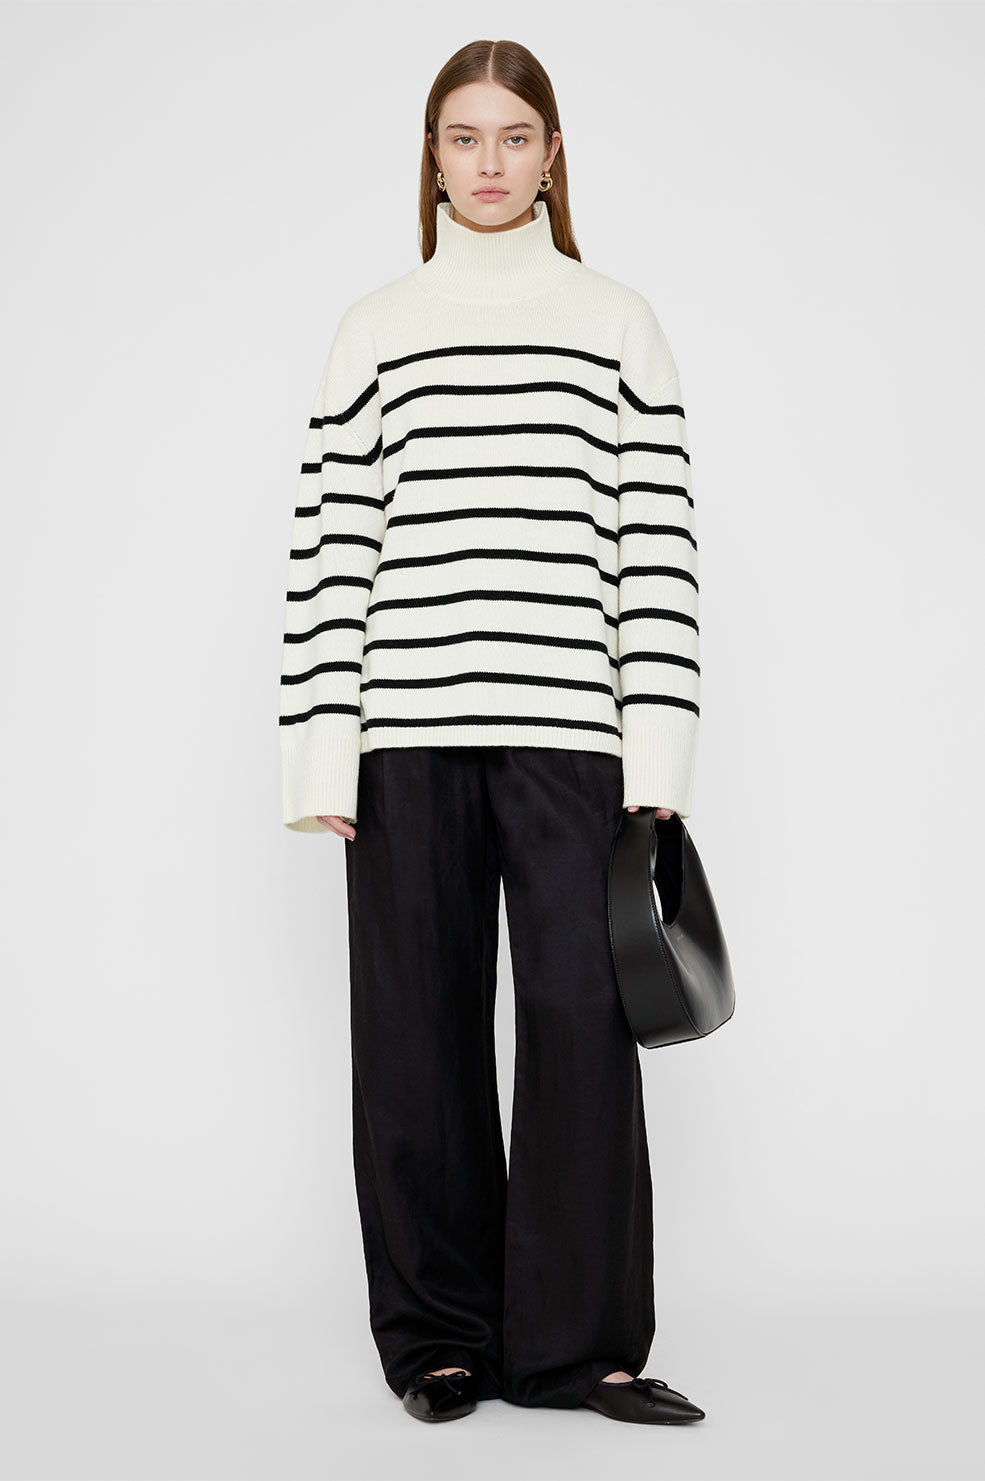 ANINE BING Courtney Sweater - Ivory And Black Stripe